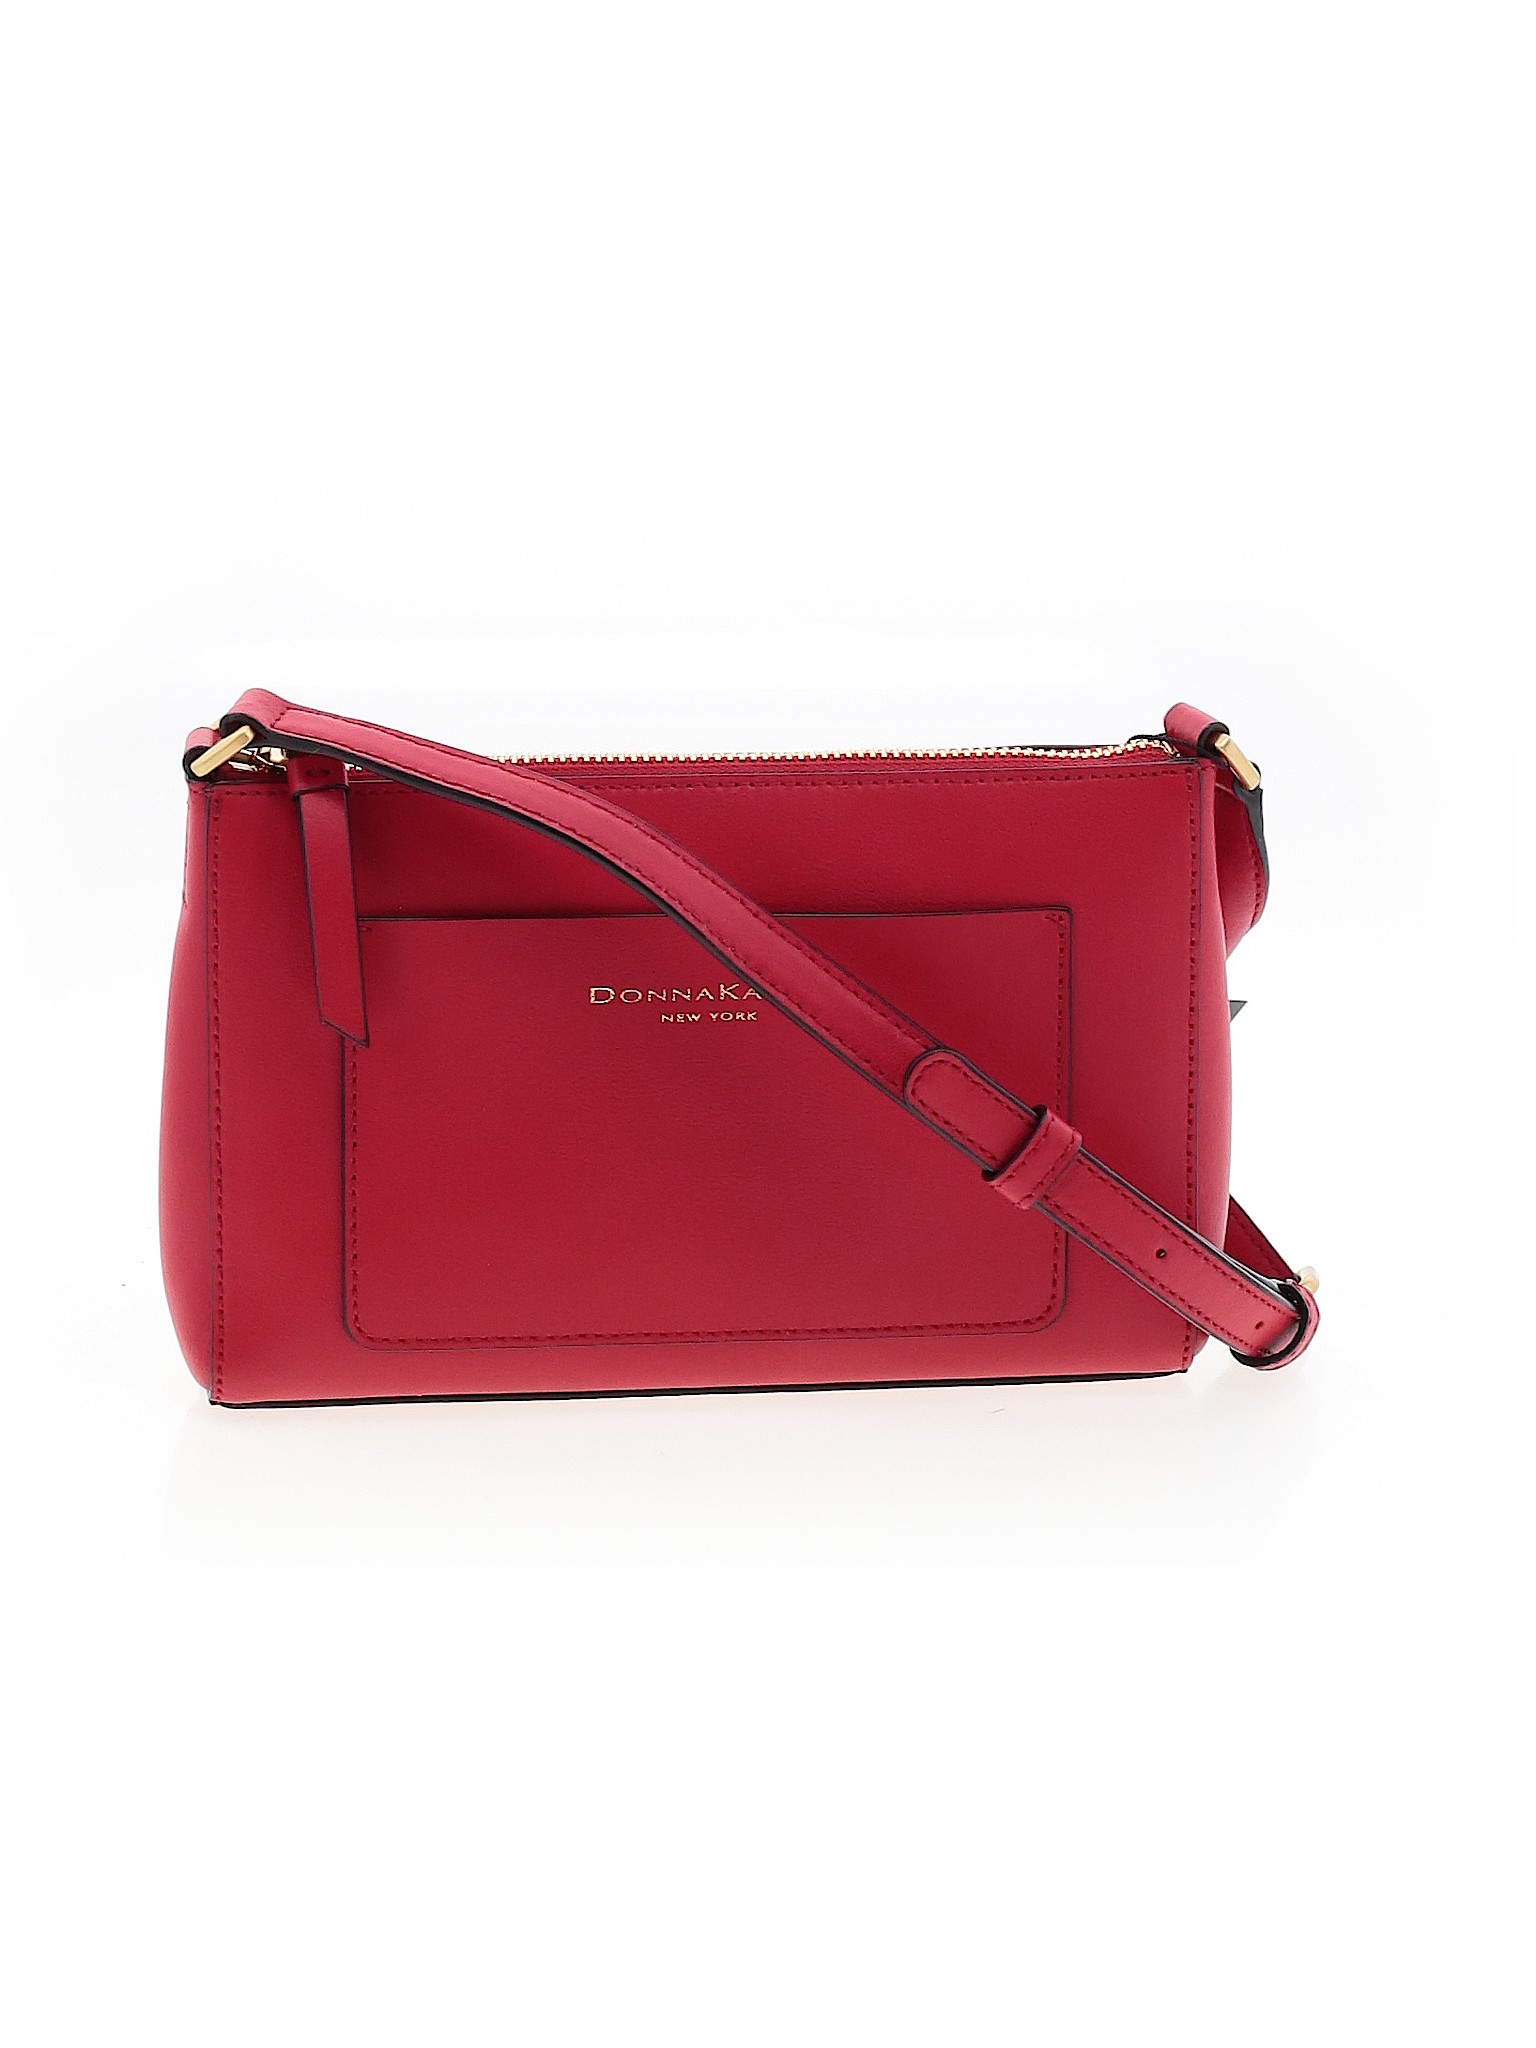 NWT Donna Karan New York Women Red Leather Crossbody Bag One Size | eBay